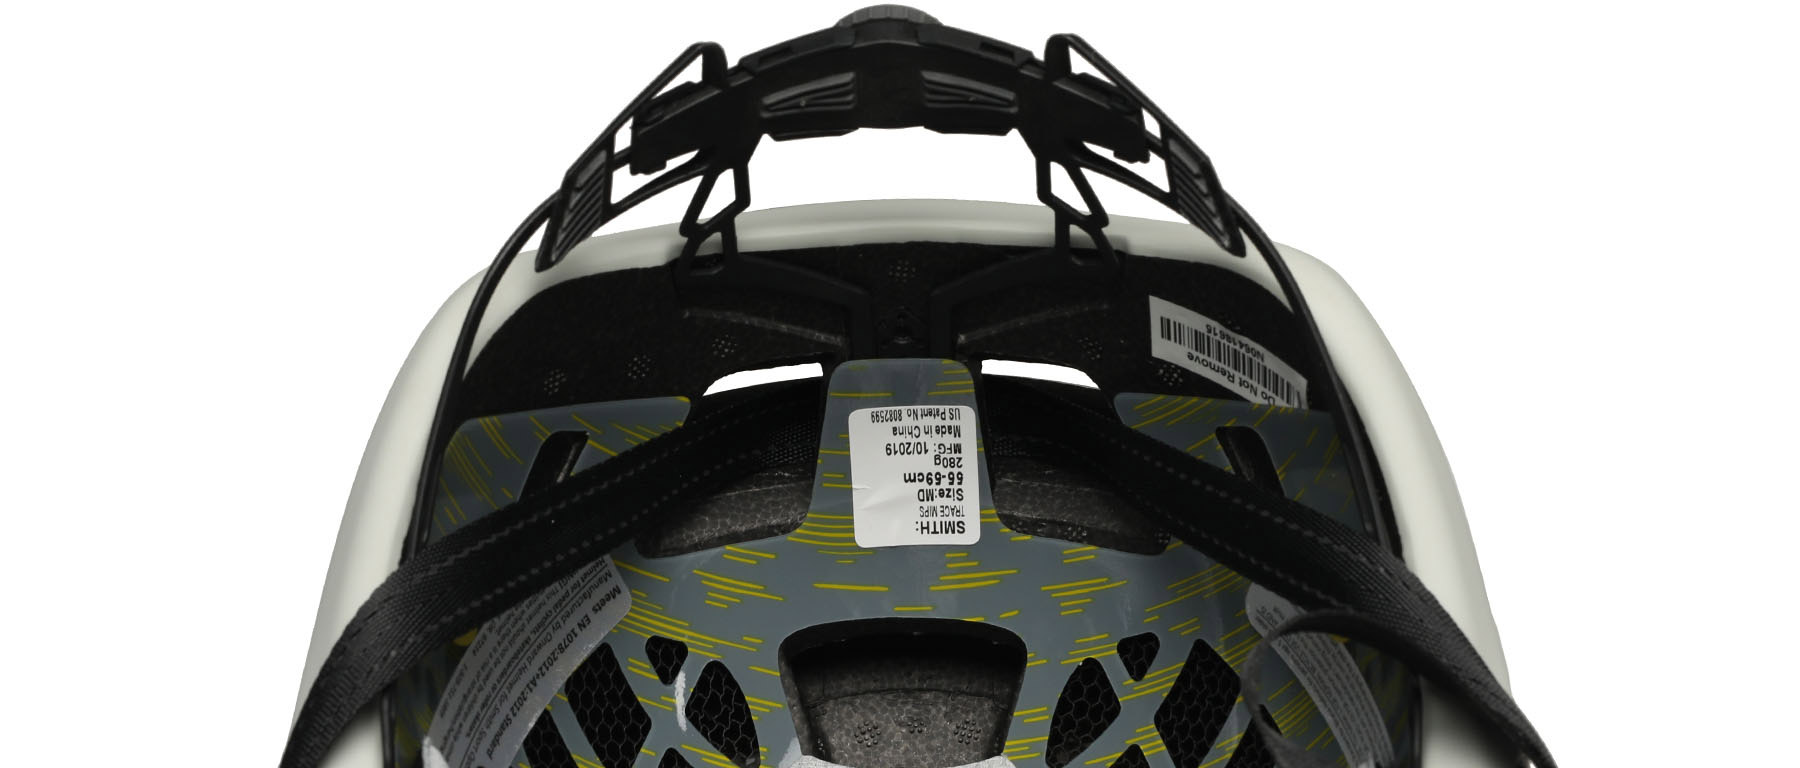 Smith Trace MIPS Helmet